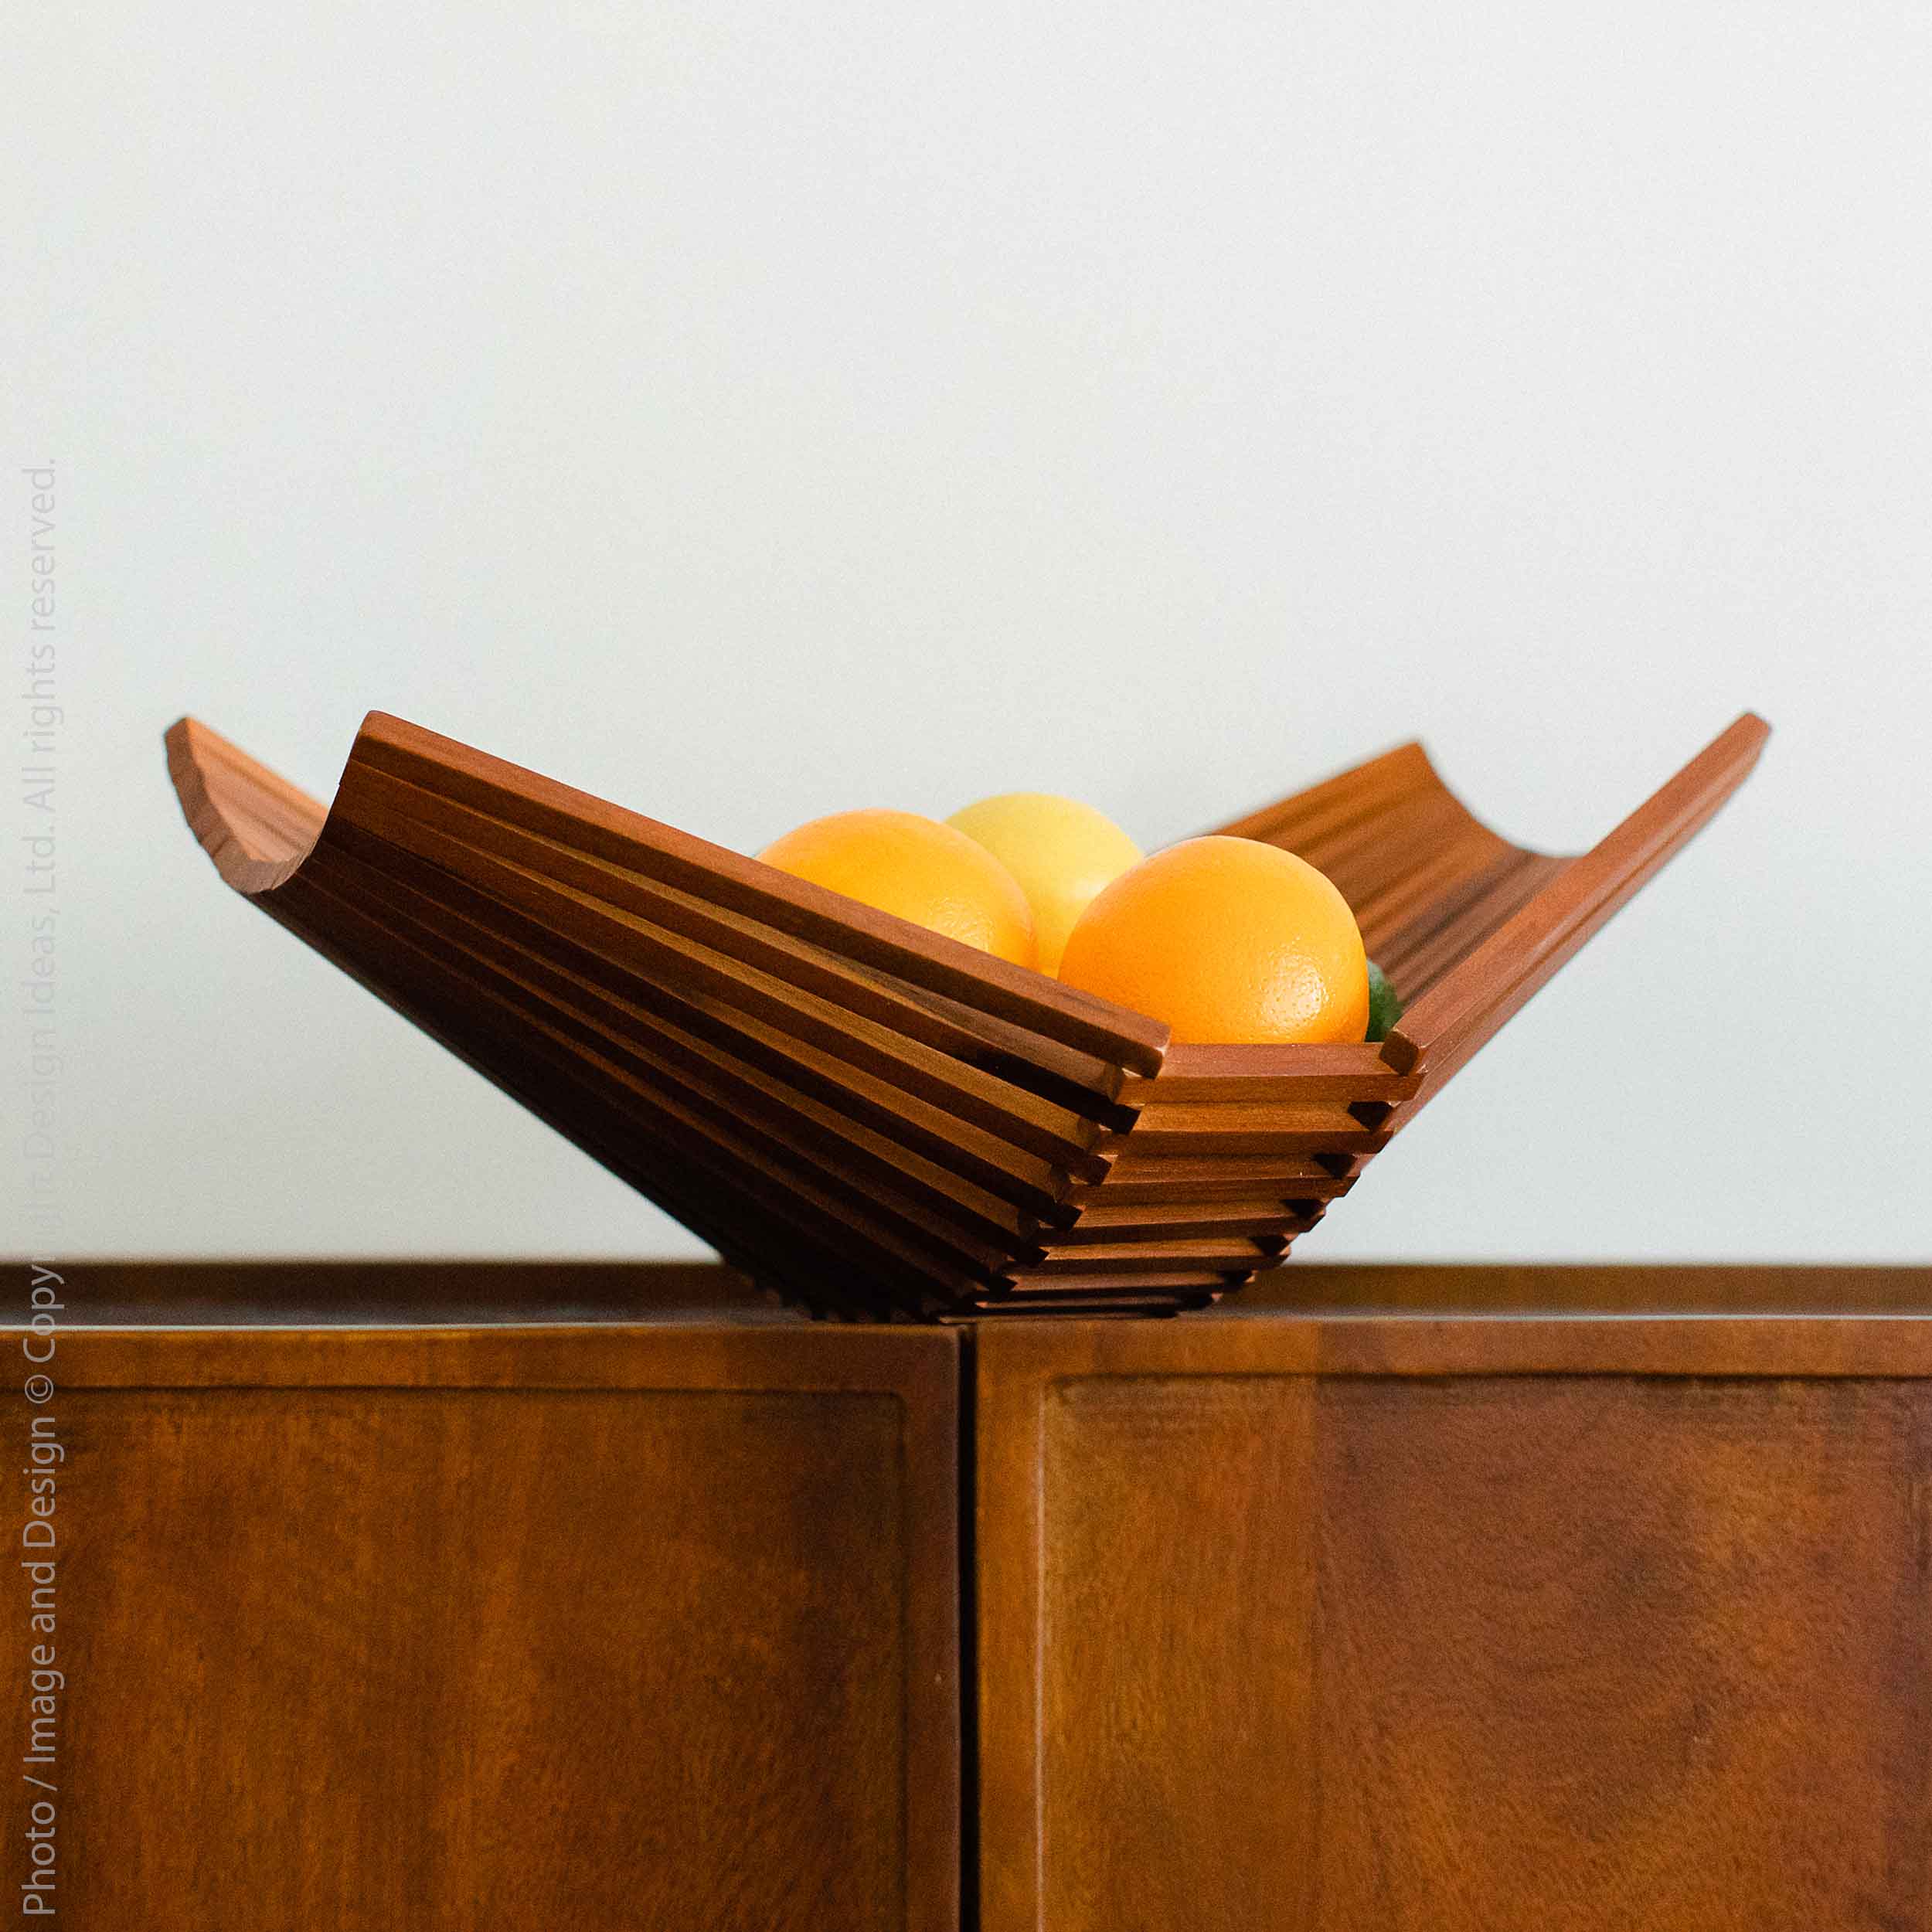 Santiago™ Wood Fruit Bowl